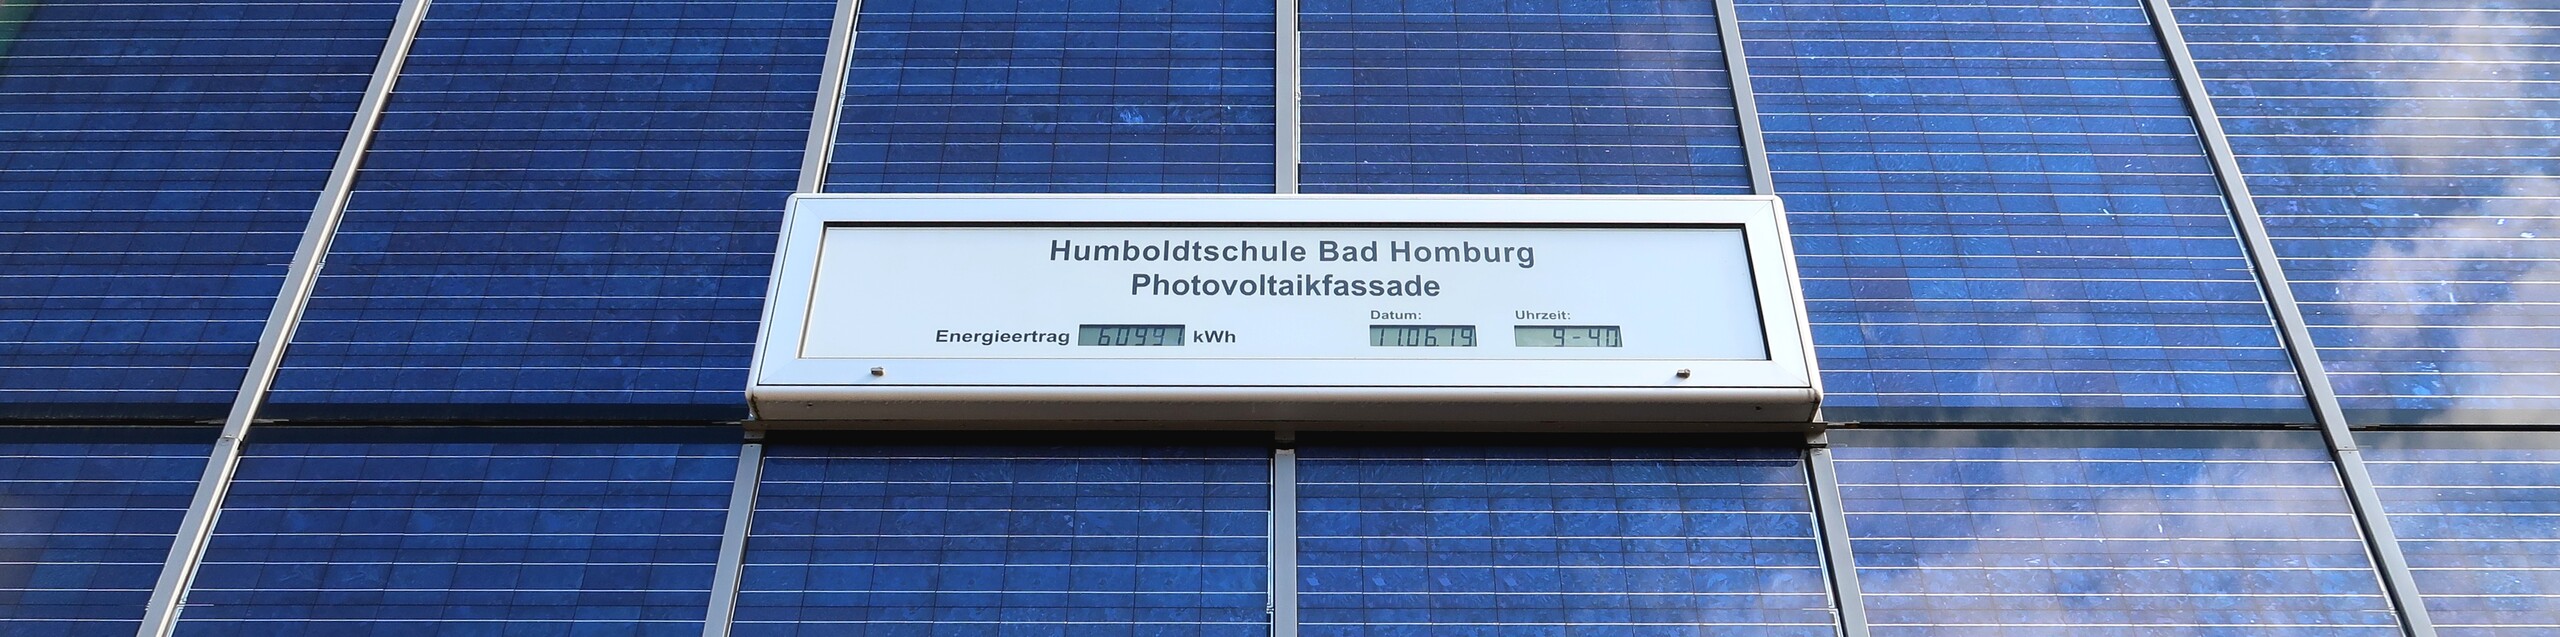 Photovoltaik-Fassade der Humboldtschule